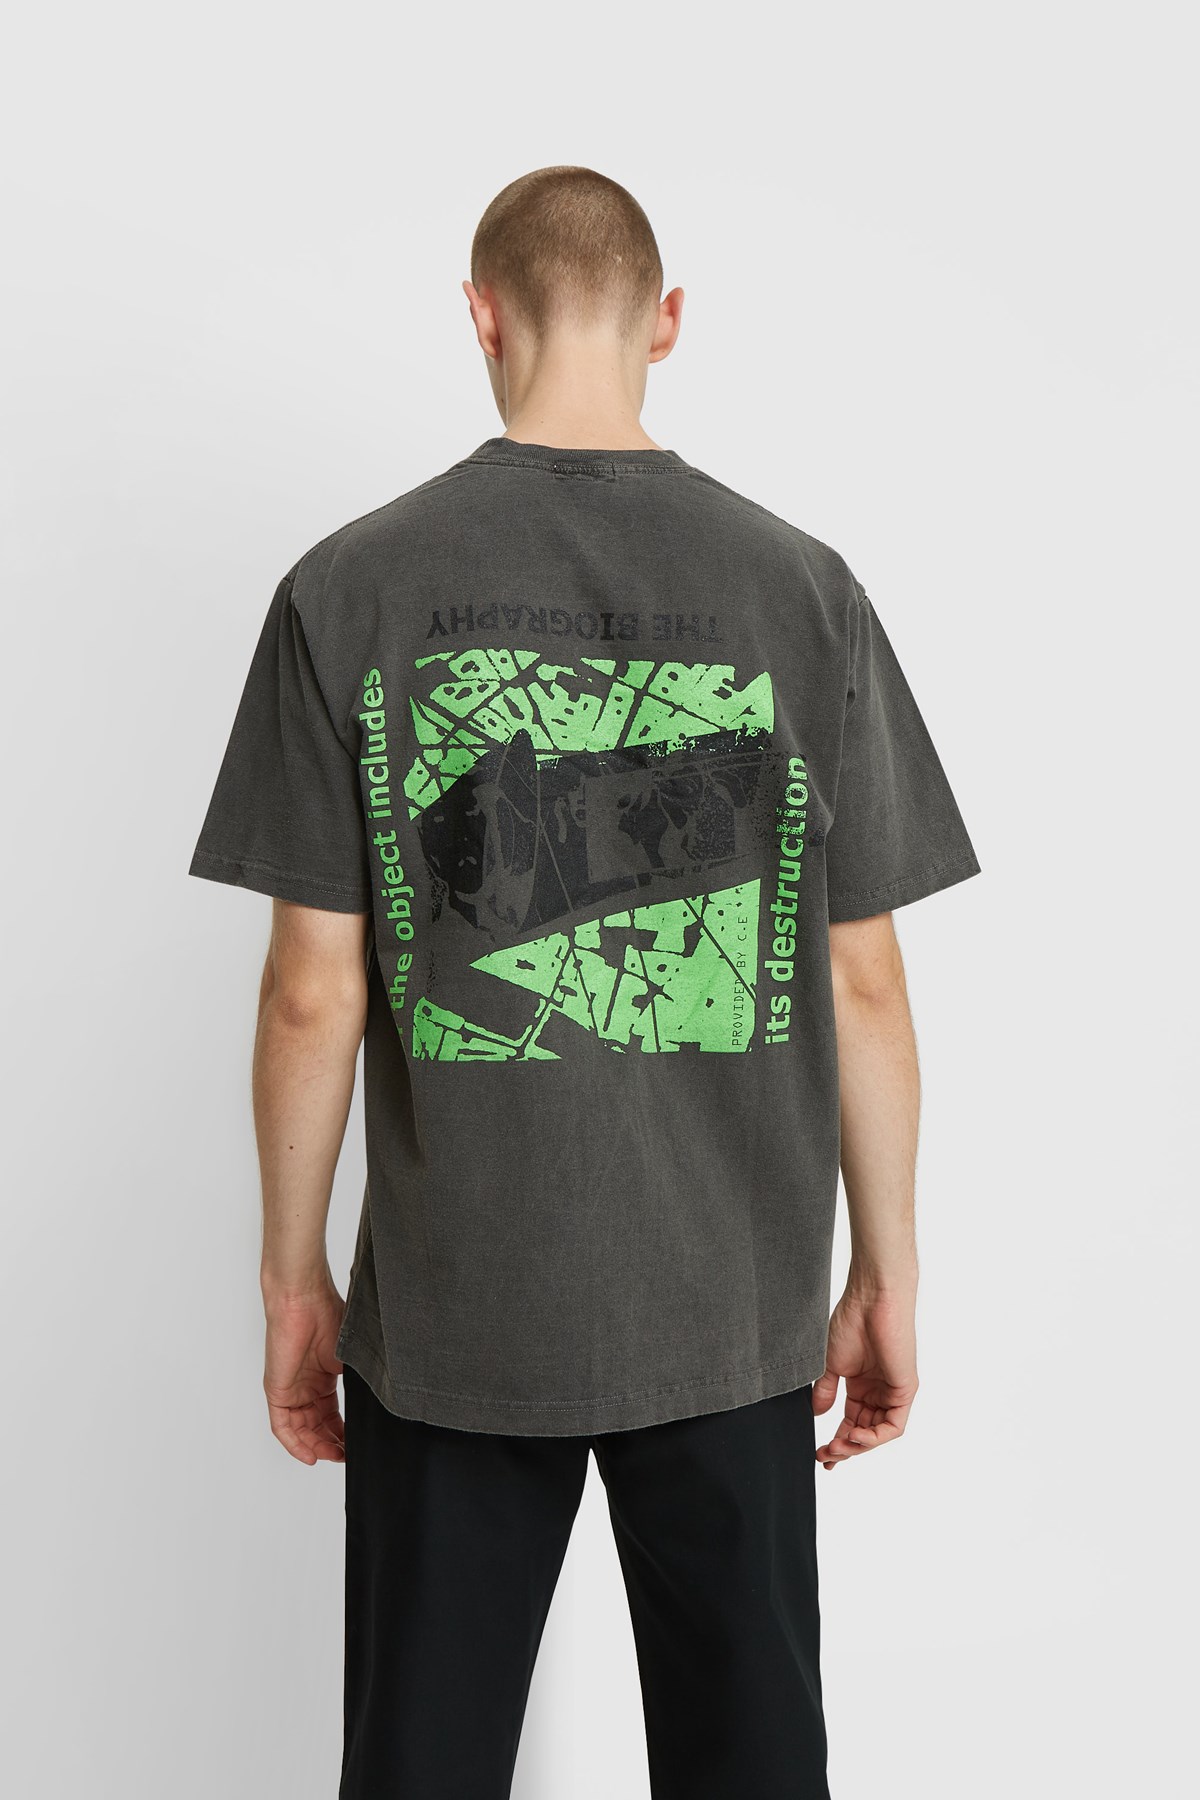 C.E CAVEMPT THE BIOGRAPHY T - Tシャツ/カットソー(半袖/袖なし)